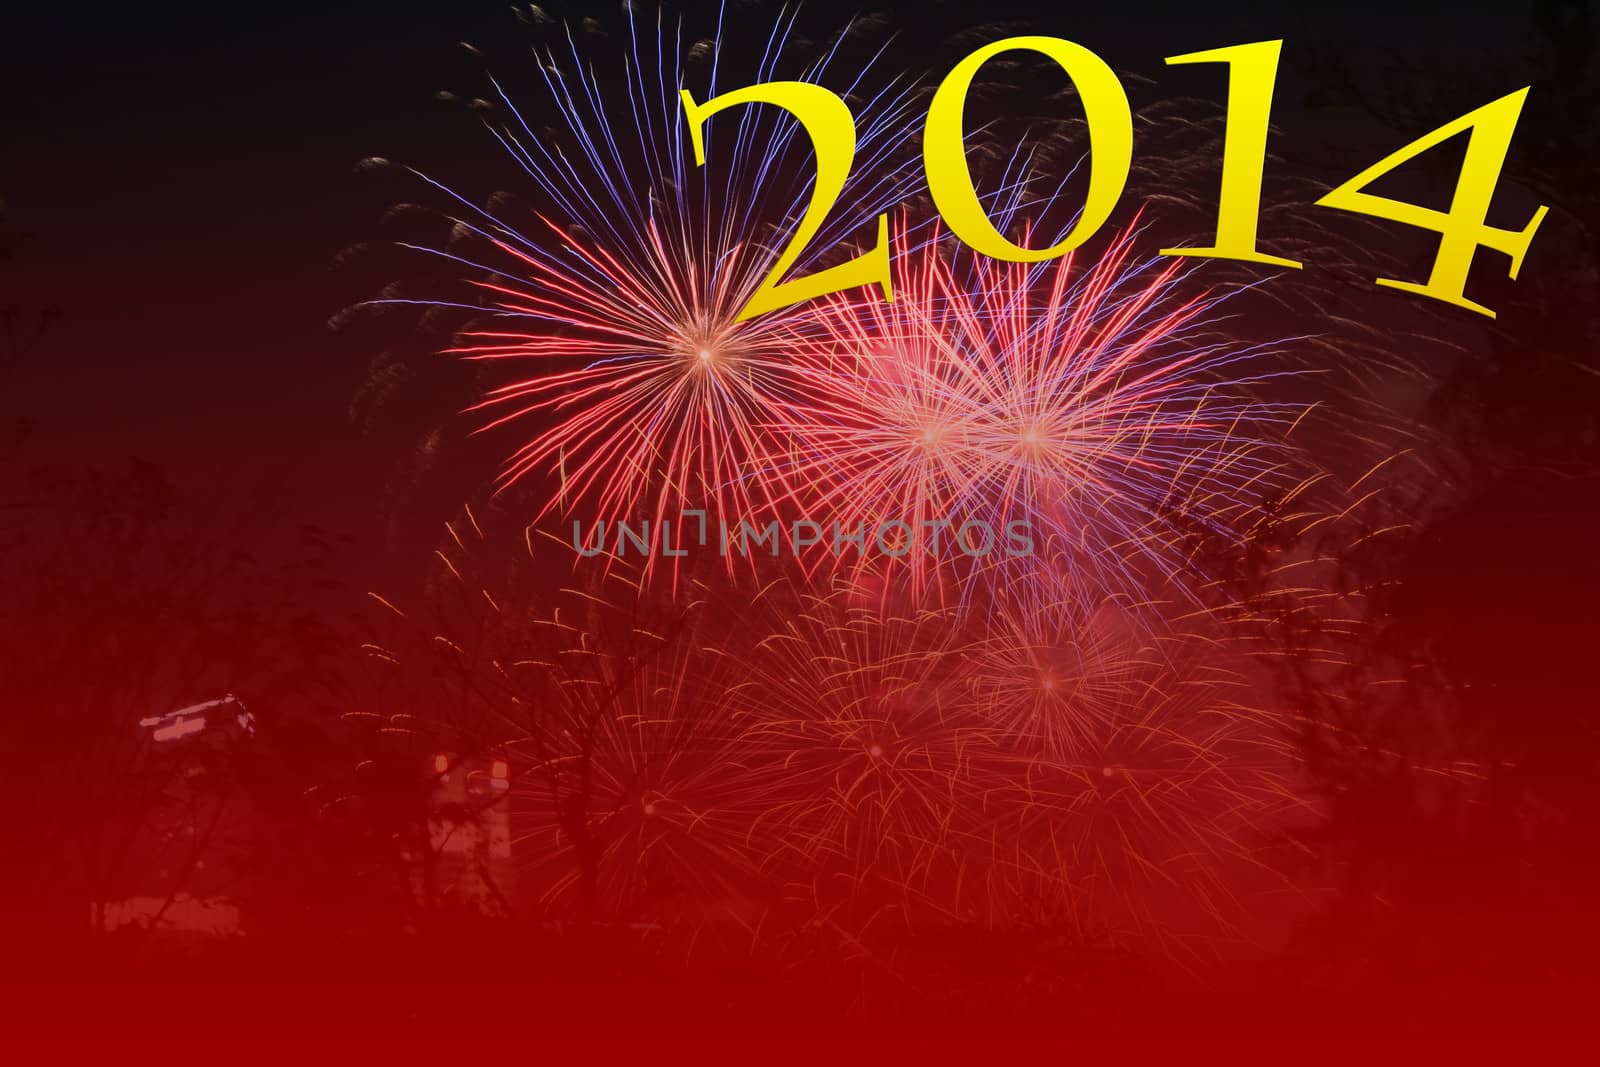 happy new year 2014 by pbsubhash